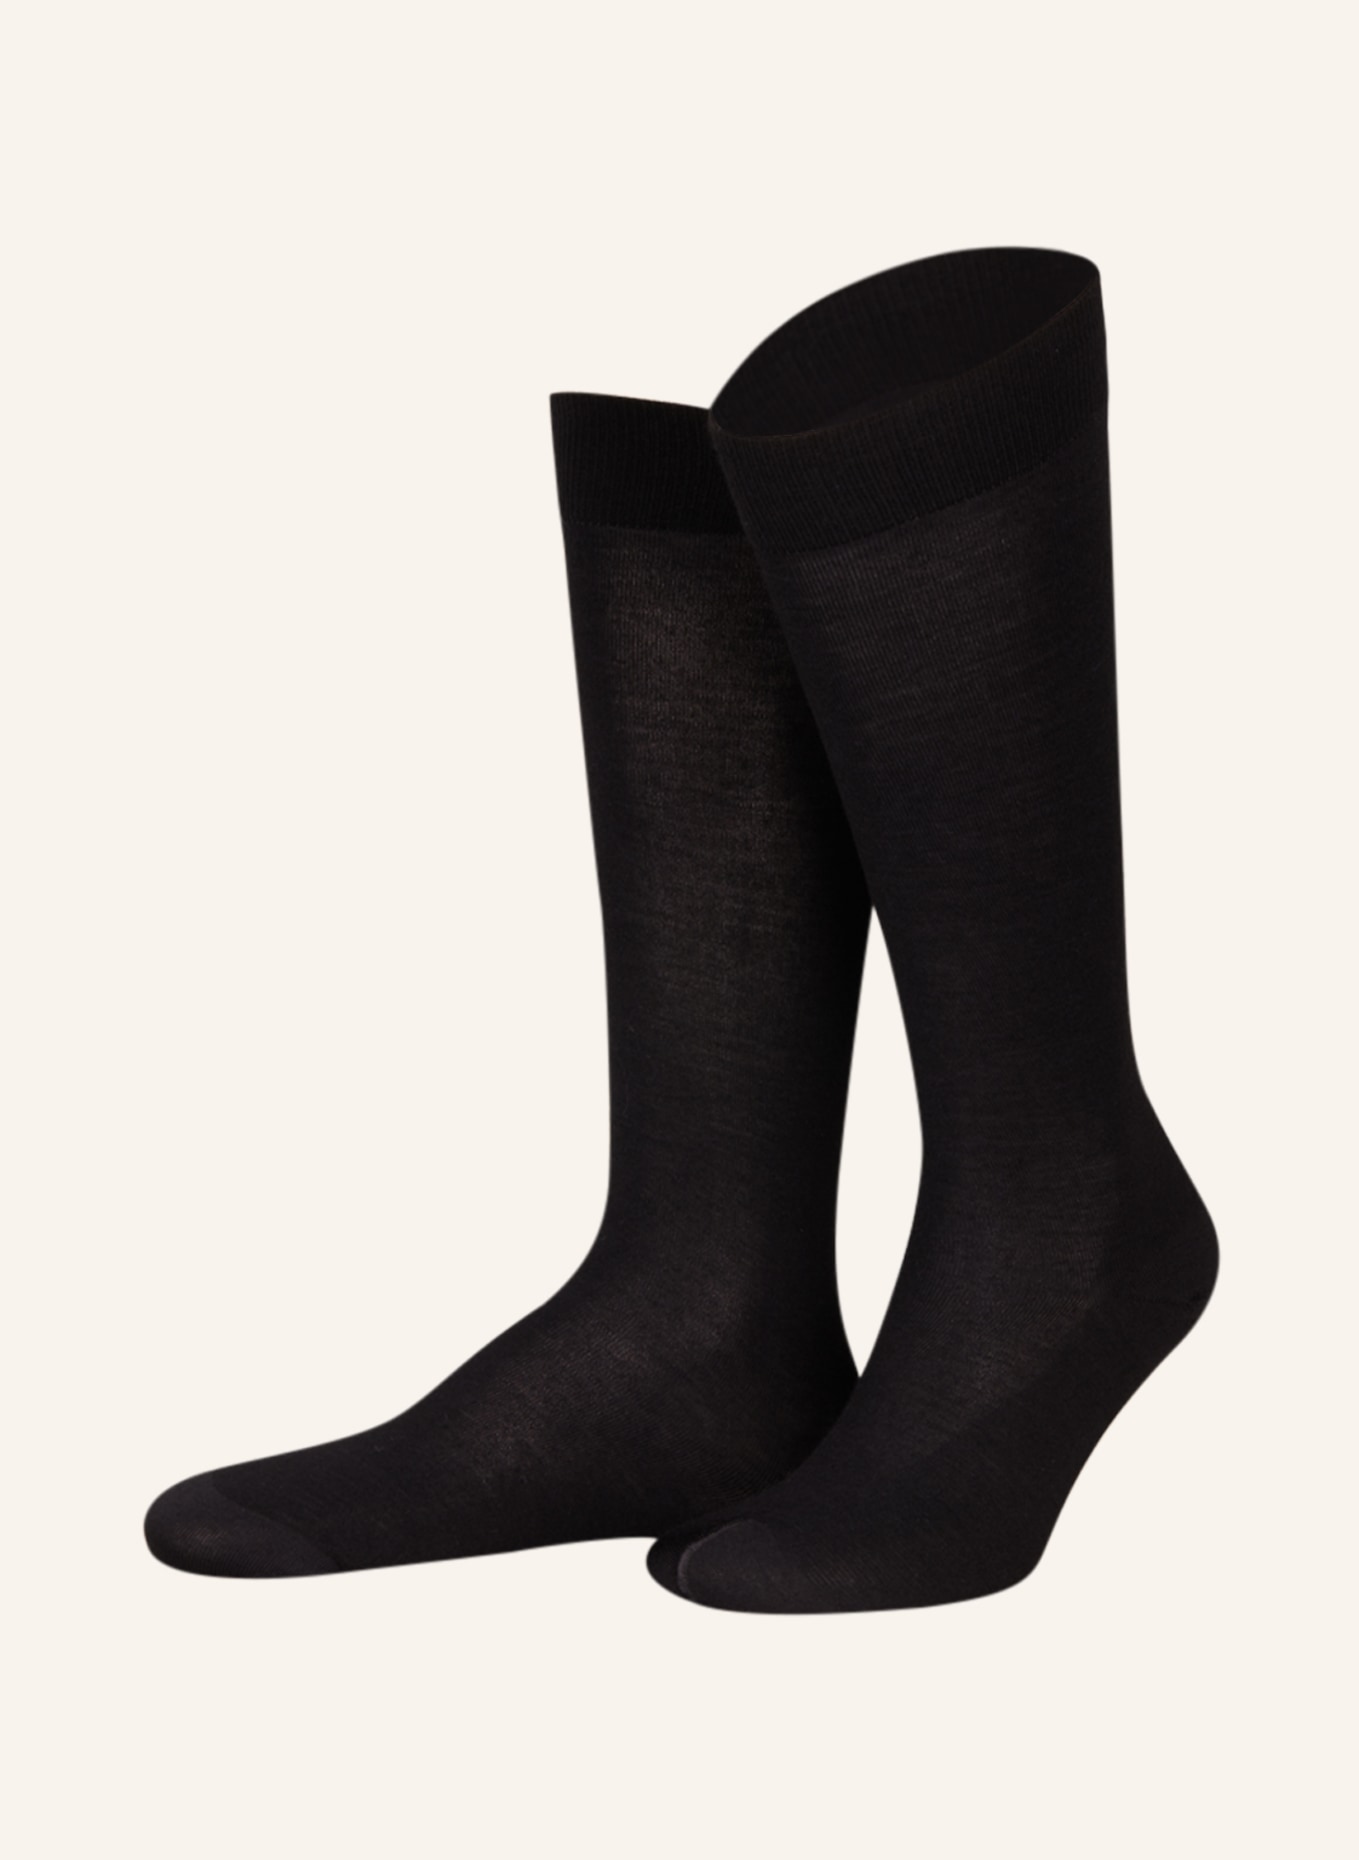 Wolford Knee high stockings MERINO with merino wool in black